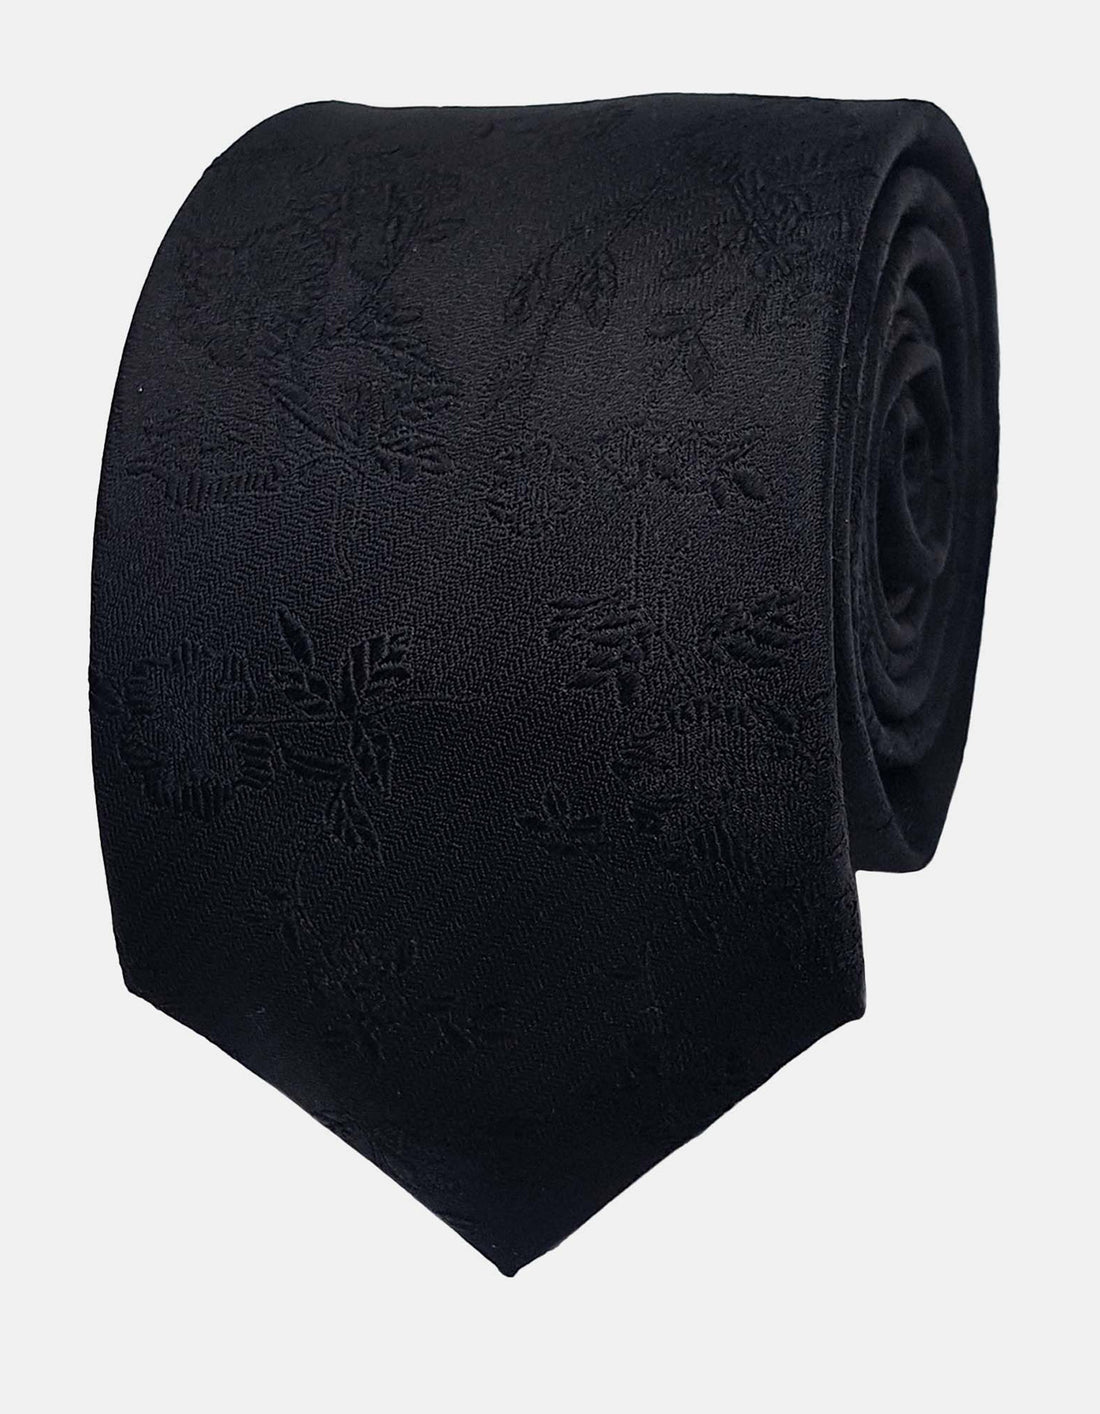 ABELARD Paisley Silk Tie BLACK